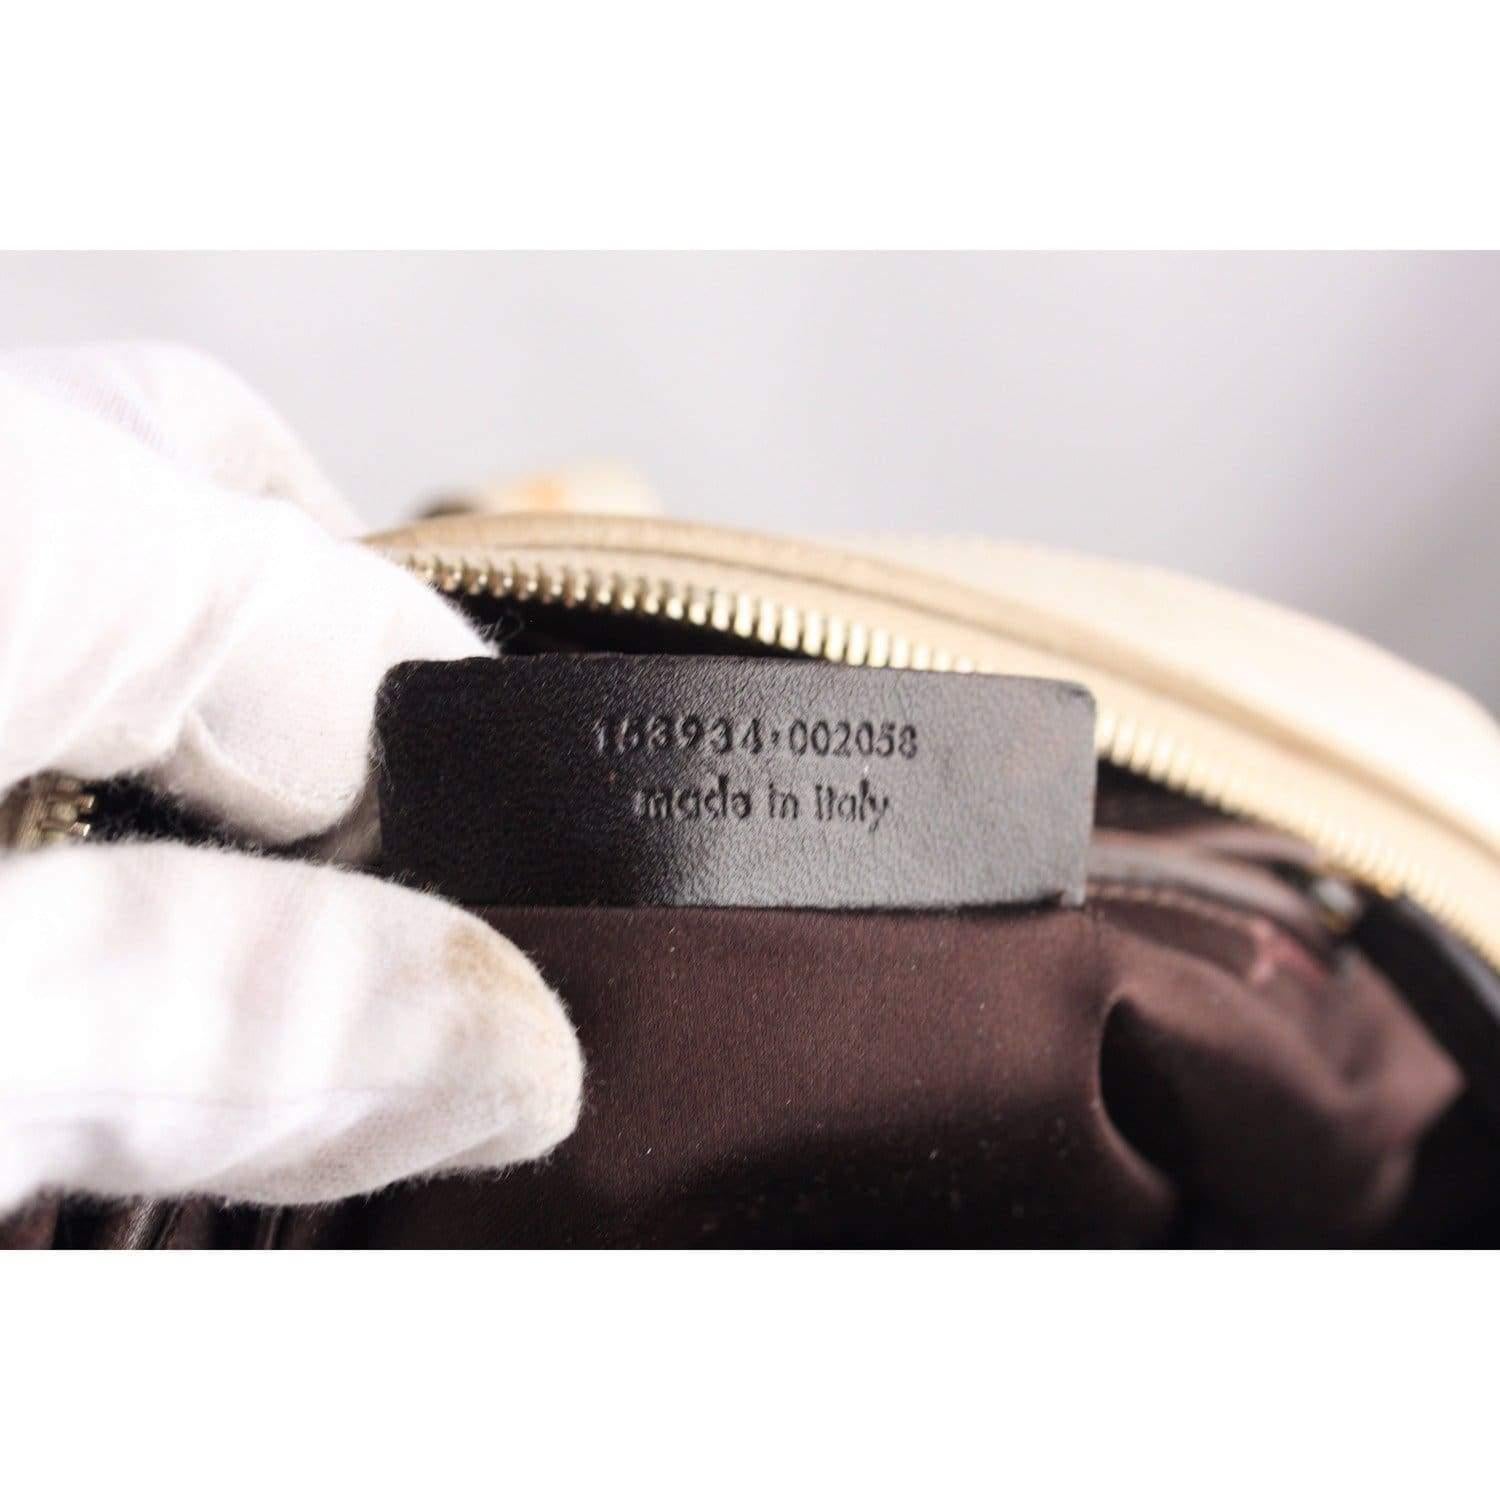 YVES SAINT LAURENT Black Patent Leather UPTOWN Bag HANDBAG Satchel 2